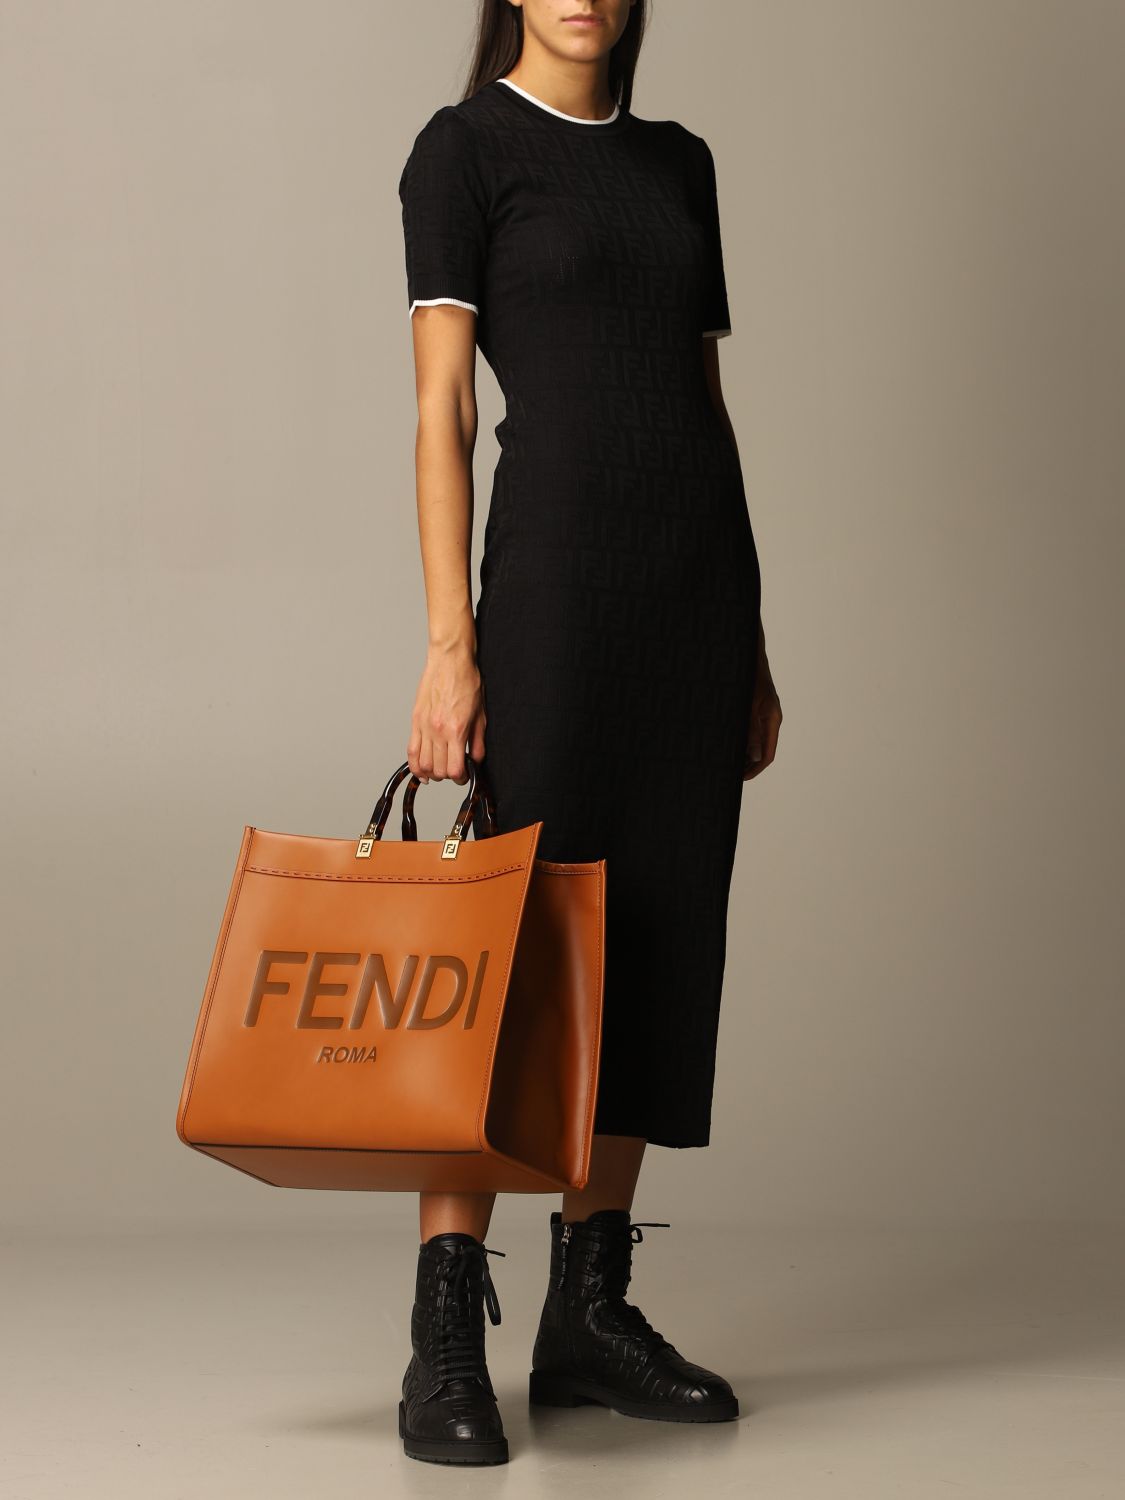 Fendi leather shopping bag with big Fendi Roma logo | Tote Bags Fendi